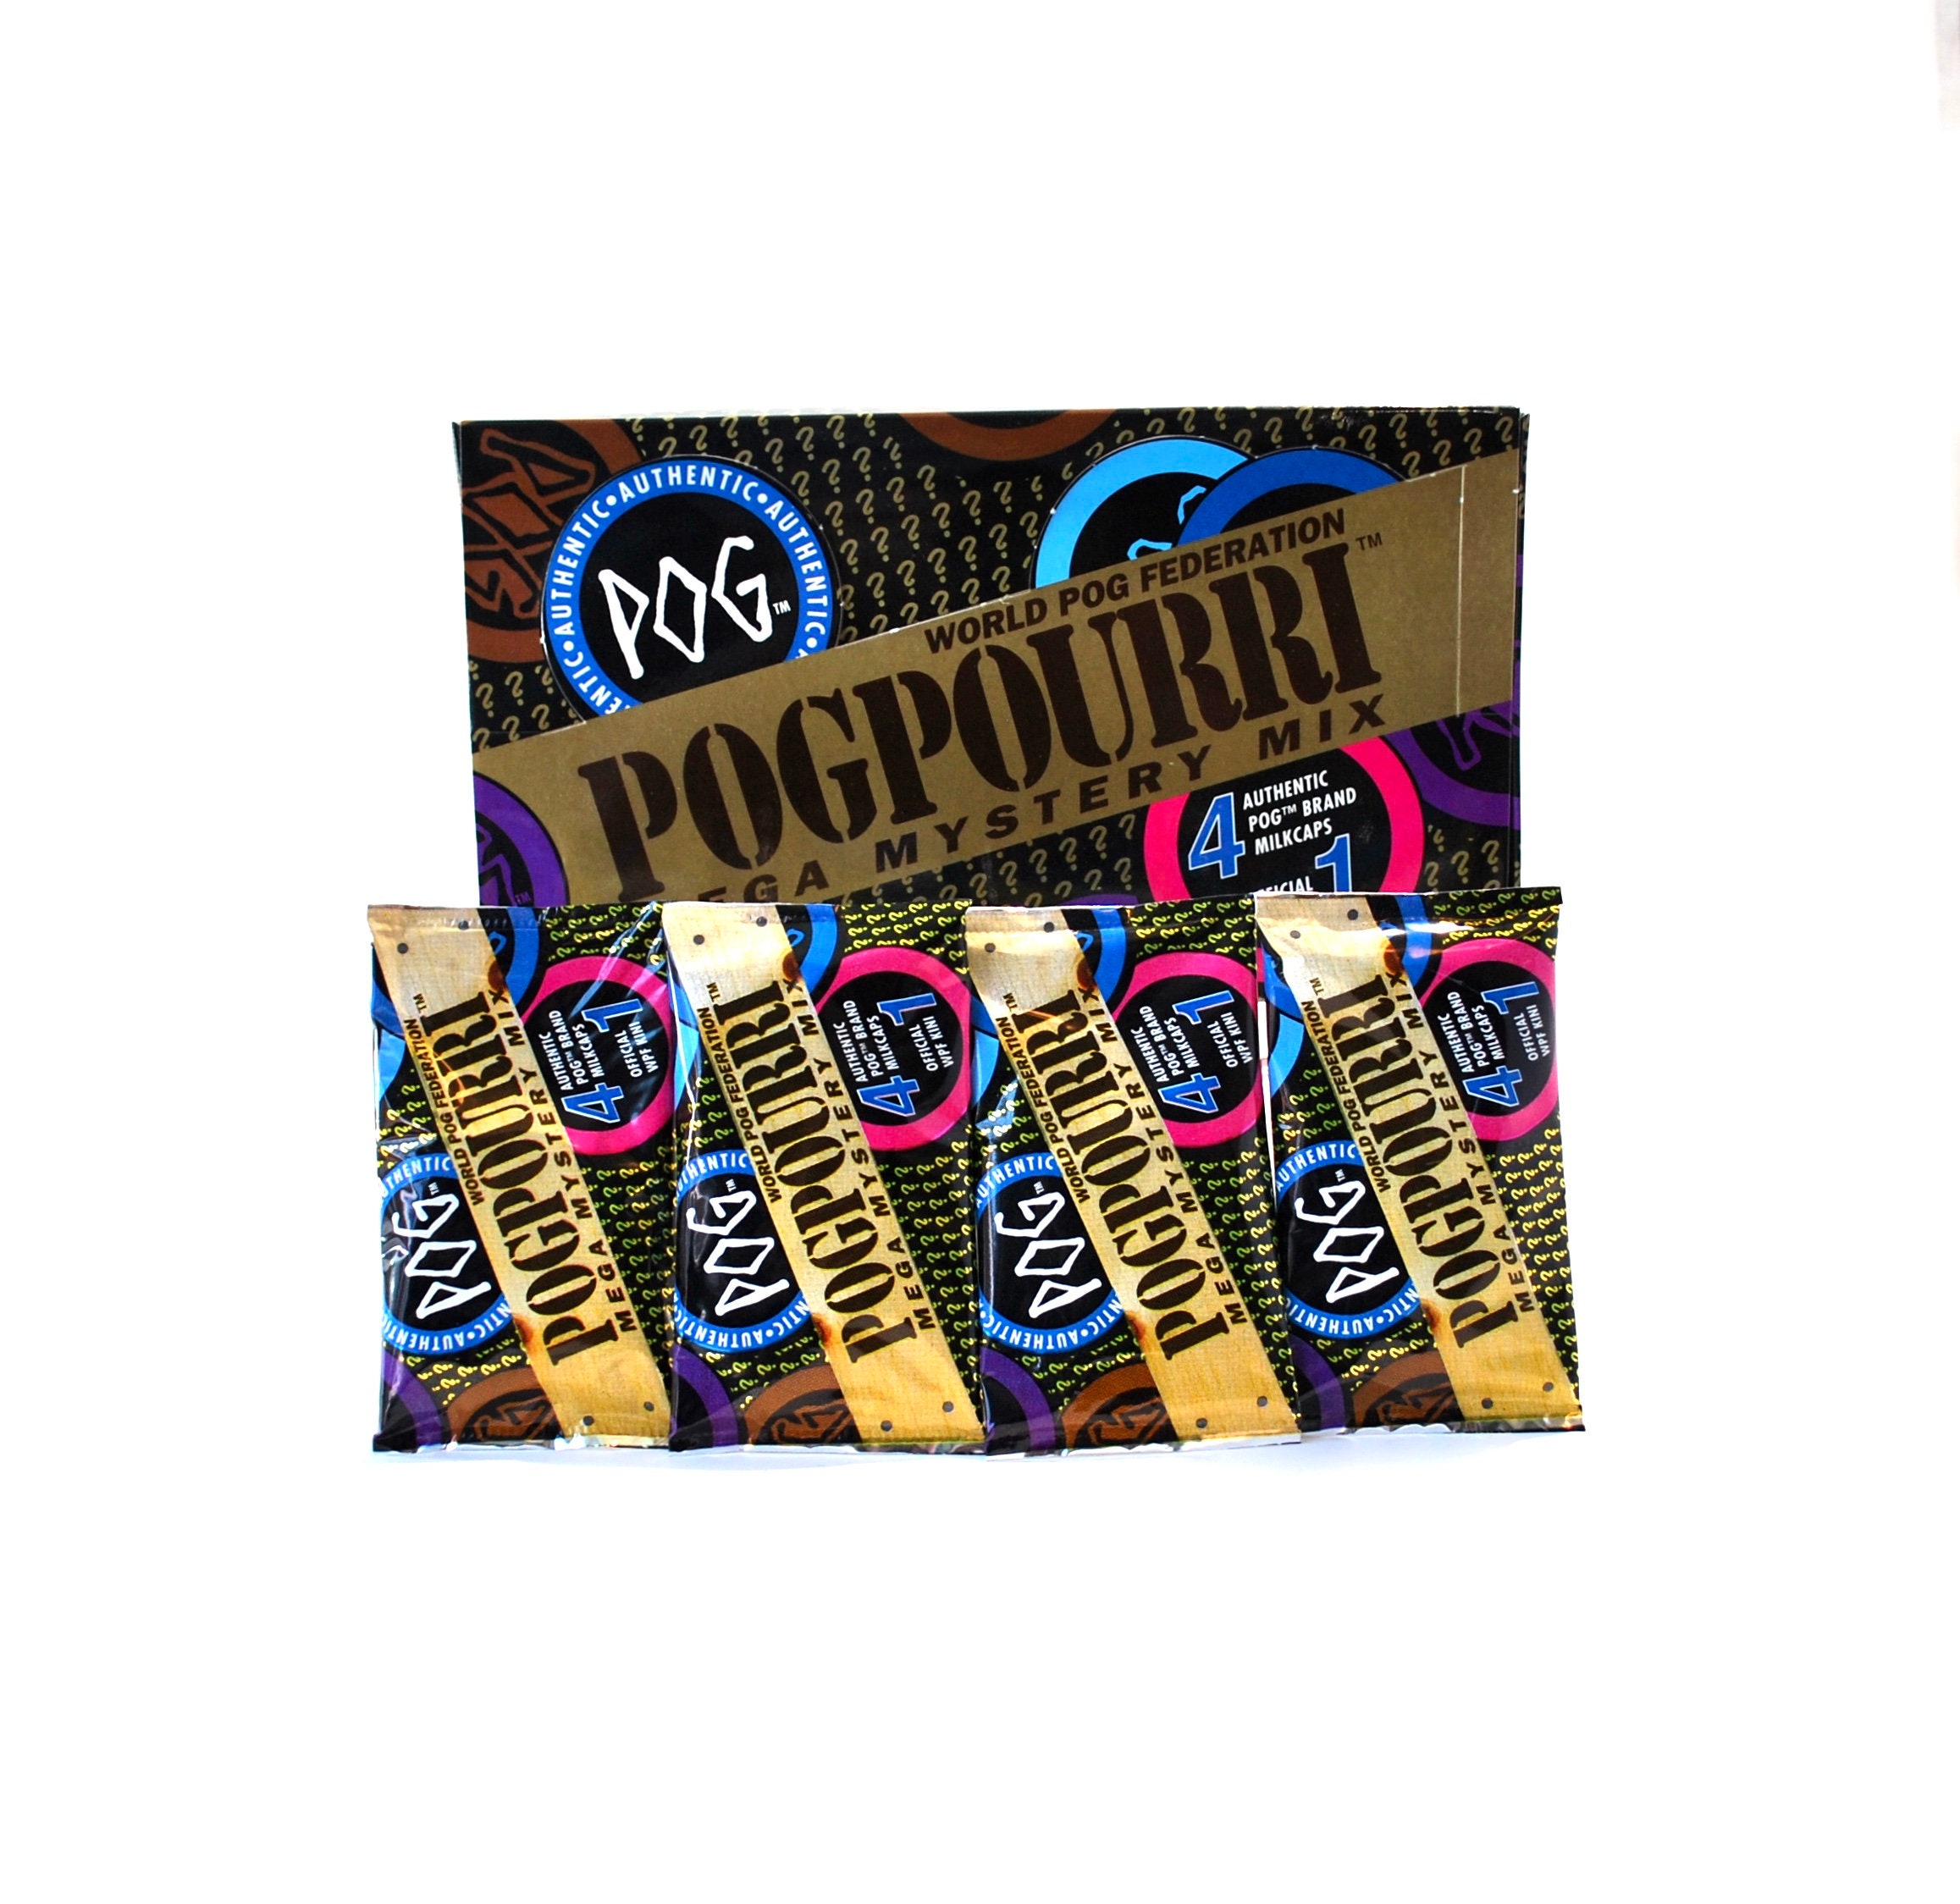 Gold Back #5 Vintage Pog Milk Cap Bin70 WPF Pogpourri Series 1 